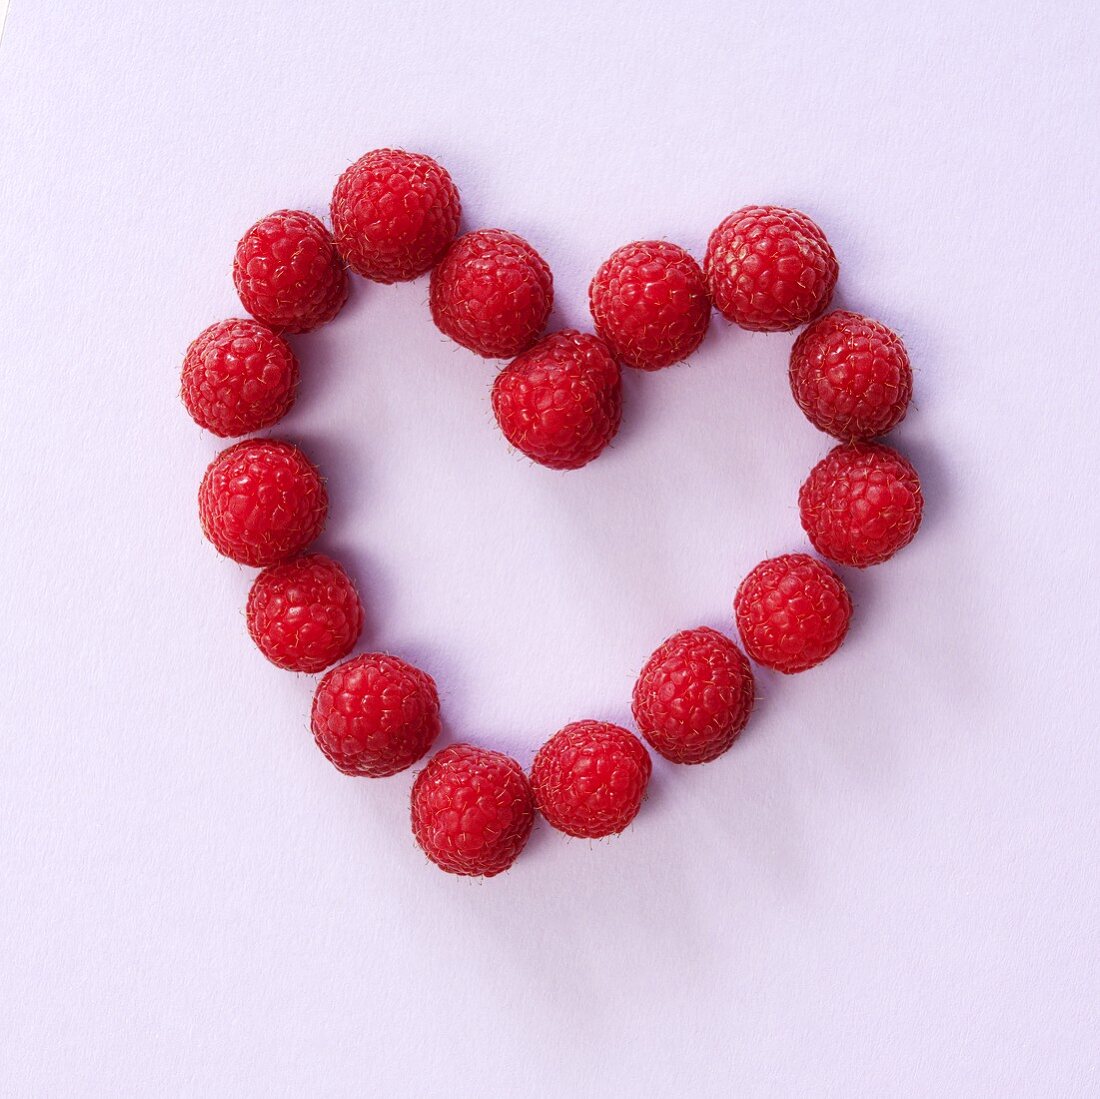 Fresh raspberries forming a heart